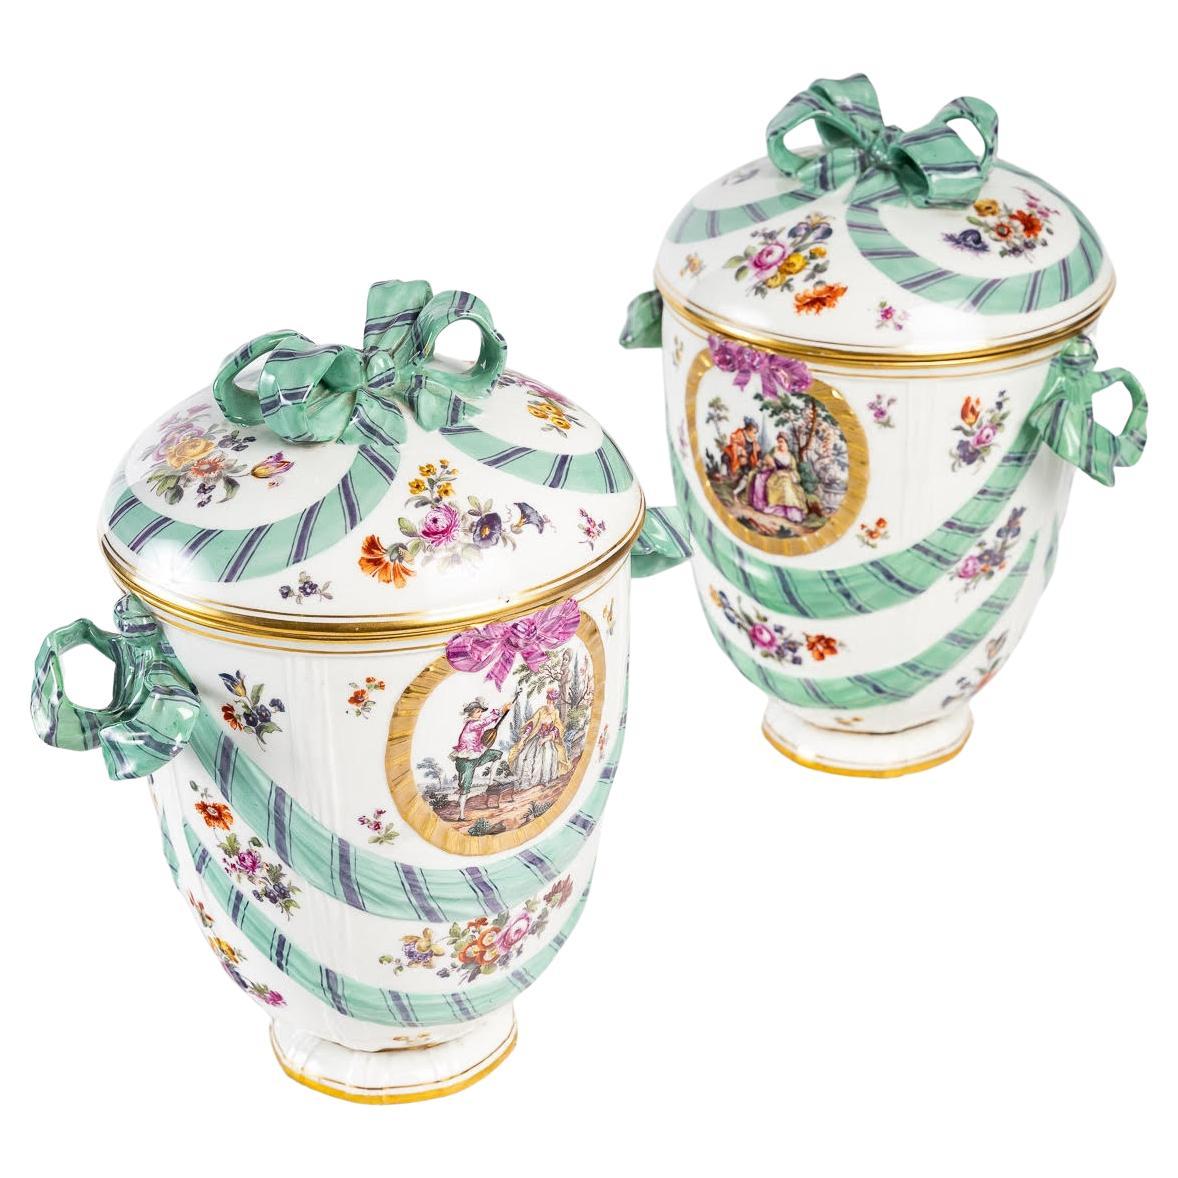 Pair of Large KPM Porcelain Covered Pots, 19th Century.